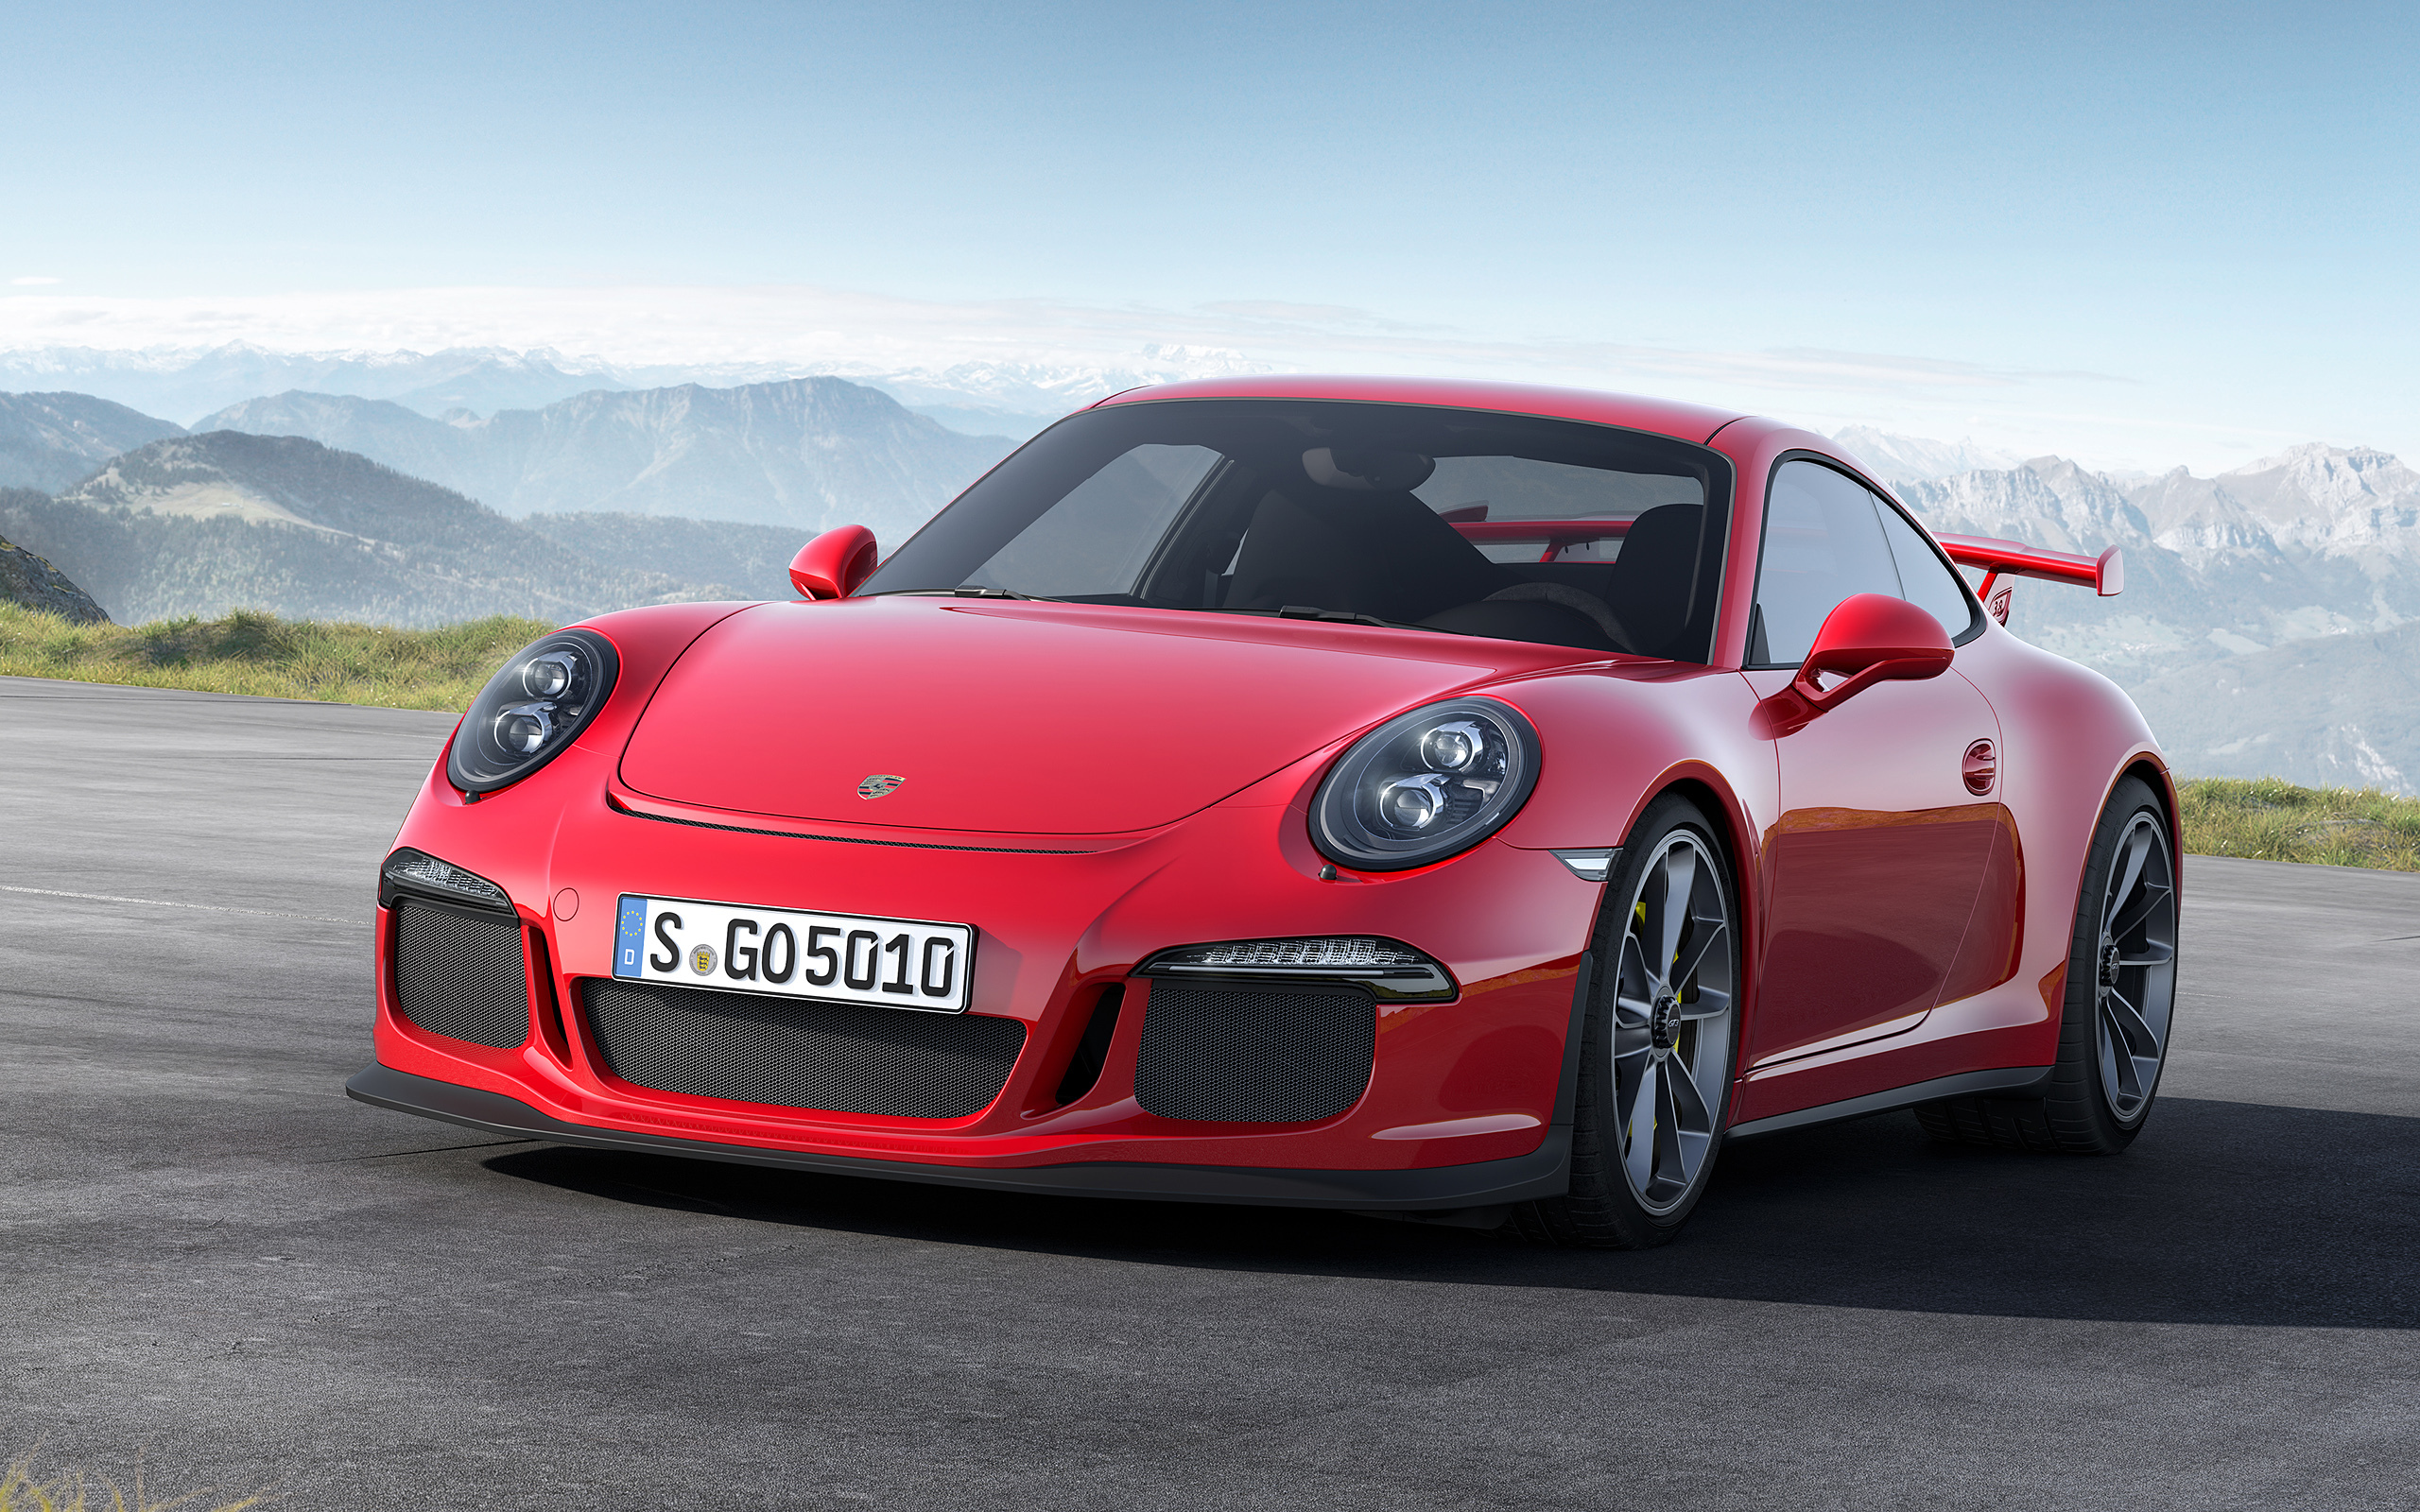   911 Porsche Red   GT3         porsche  2560x1600 - 